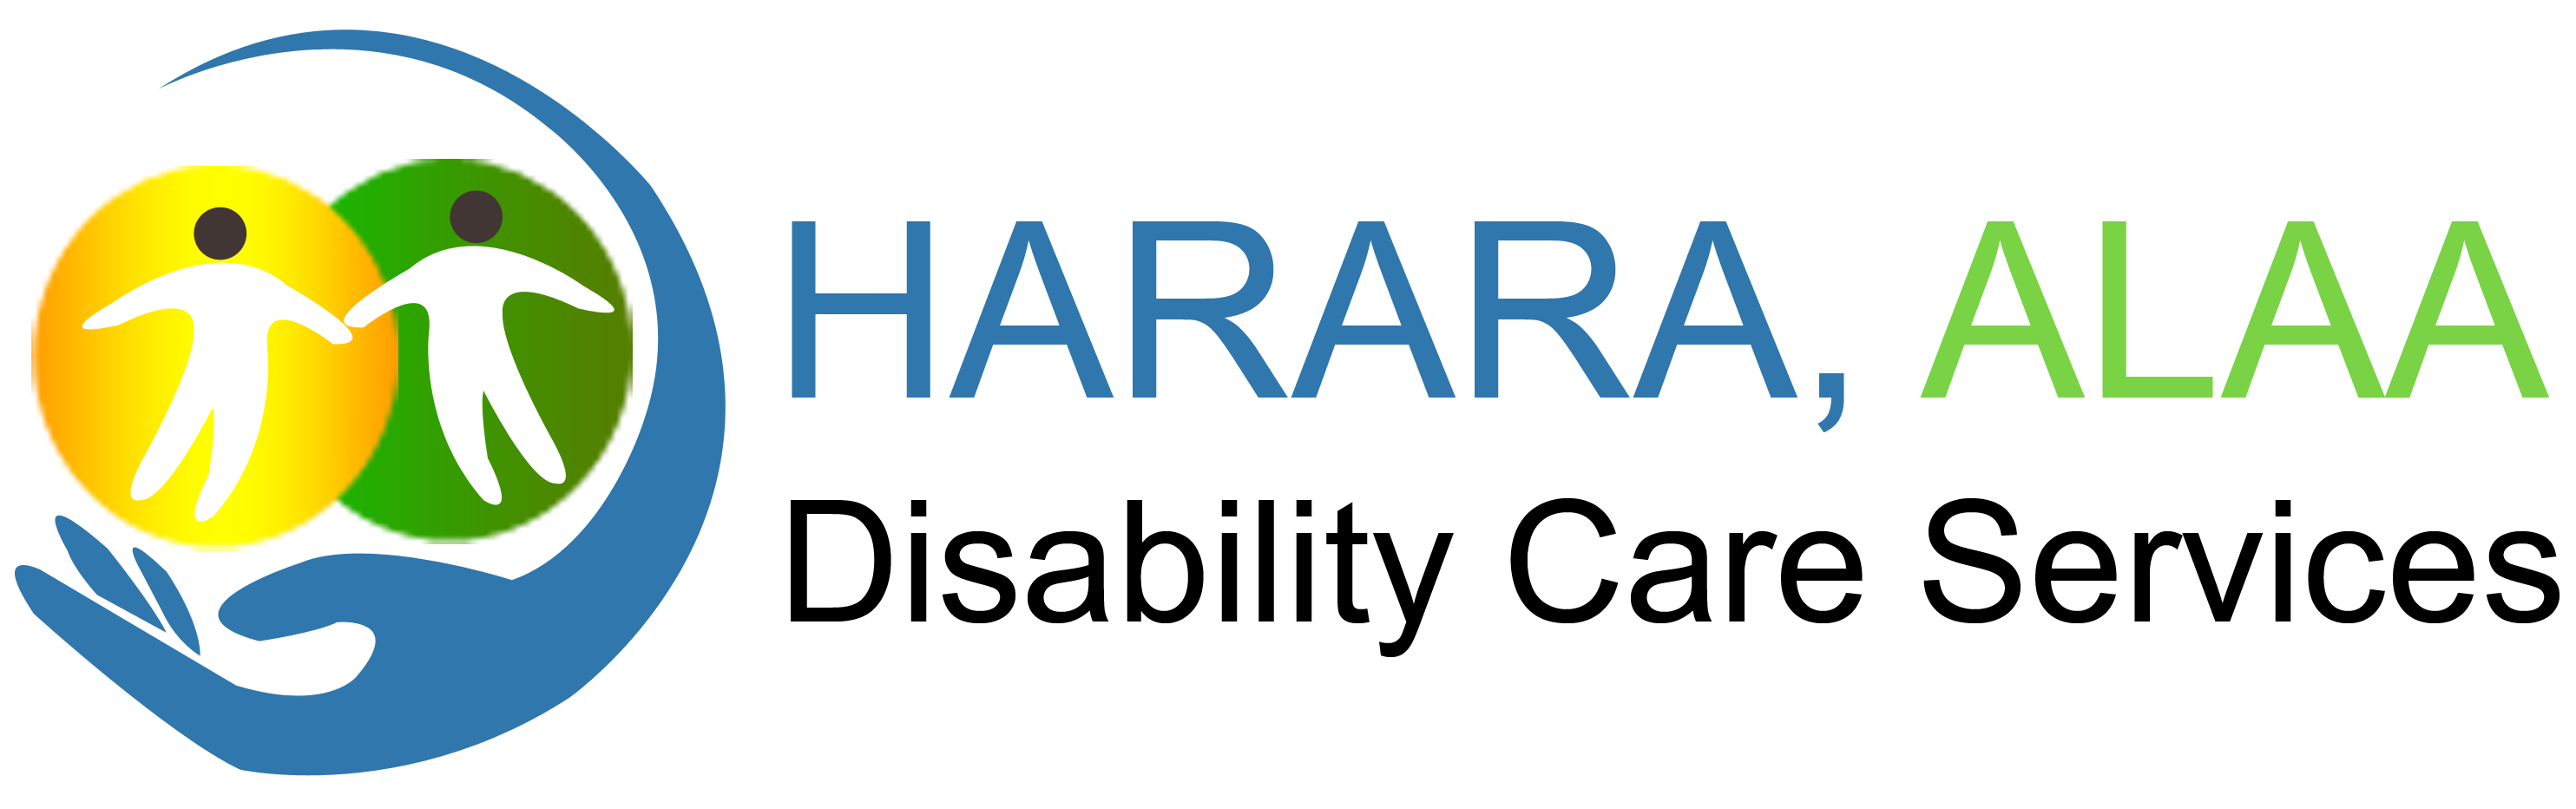 Harara, Alaa Disability Care Services